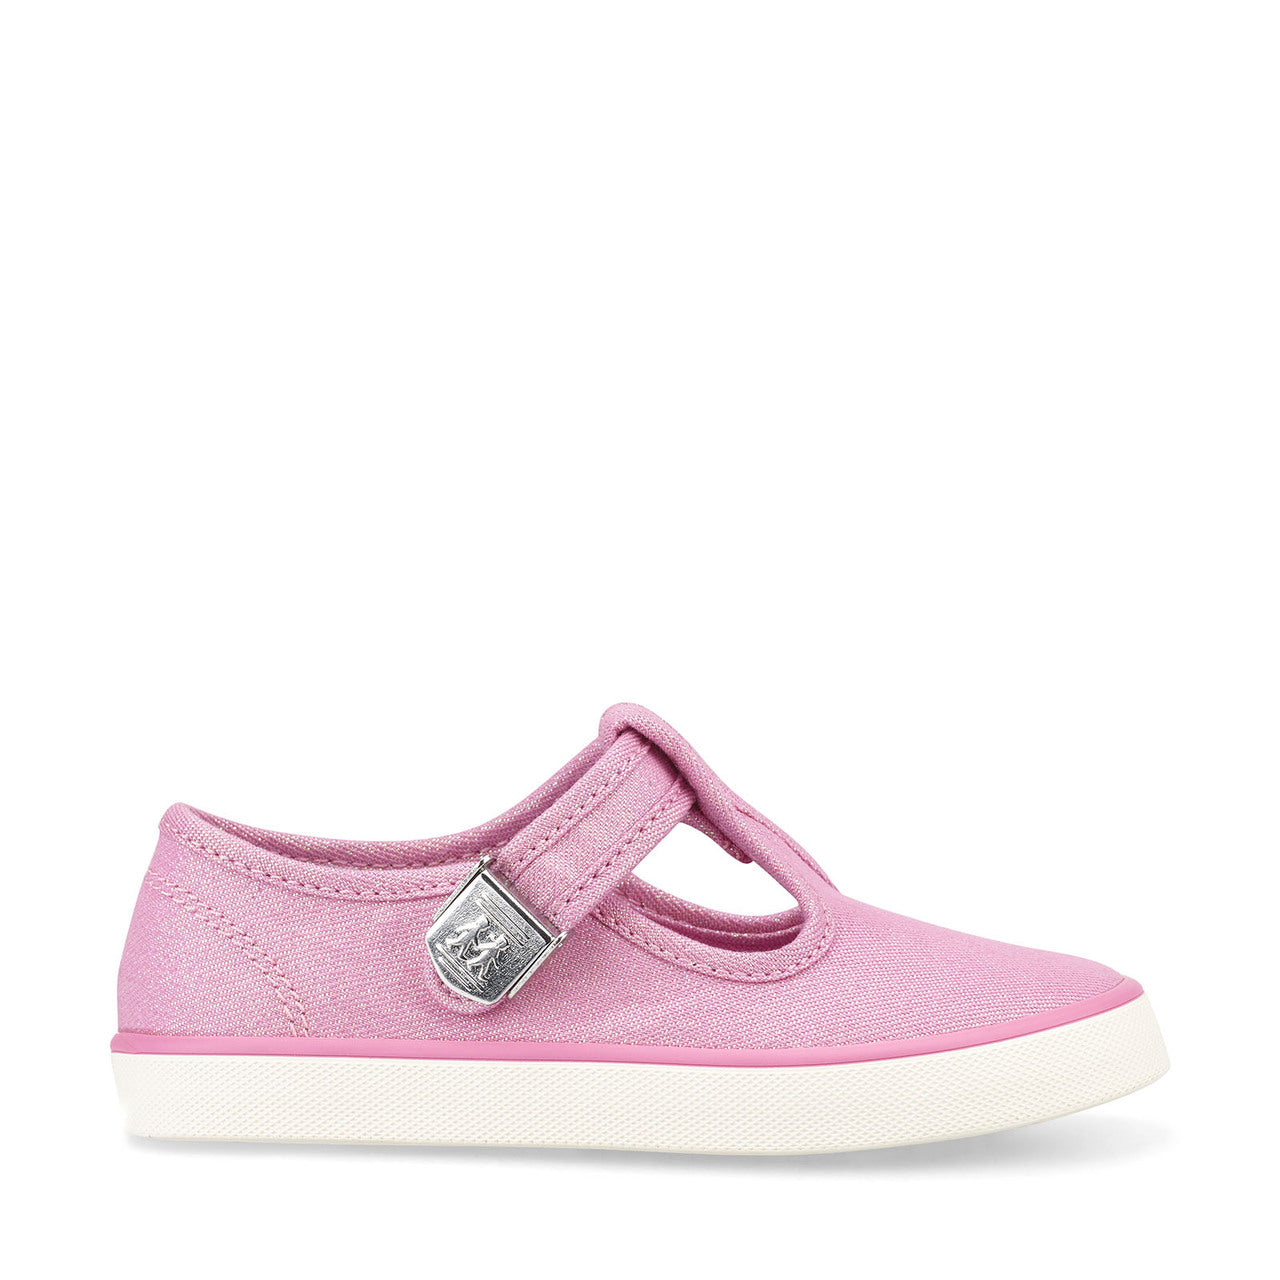 Start-Rite Treasure 6171_6 Girls Pink Glitter Canvas Shoes